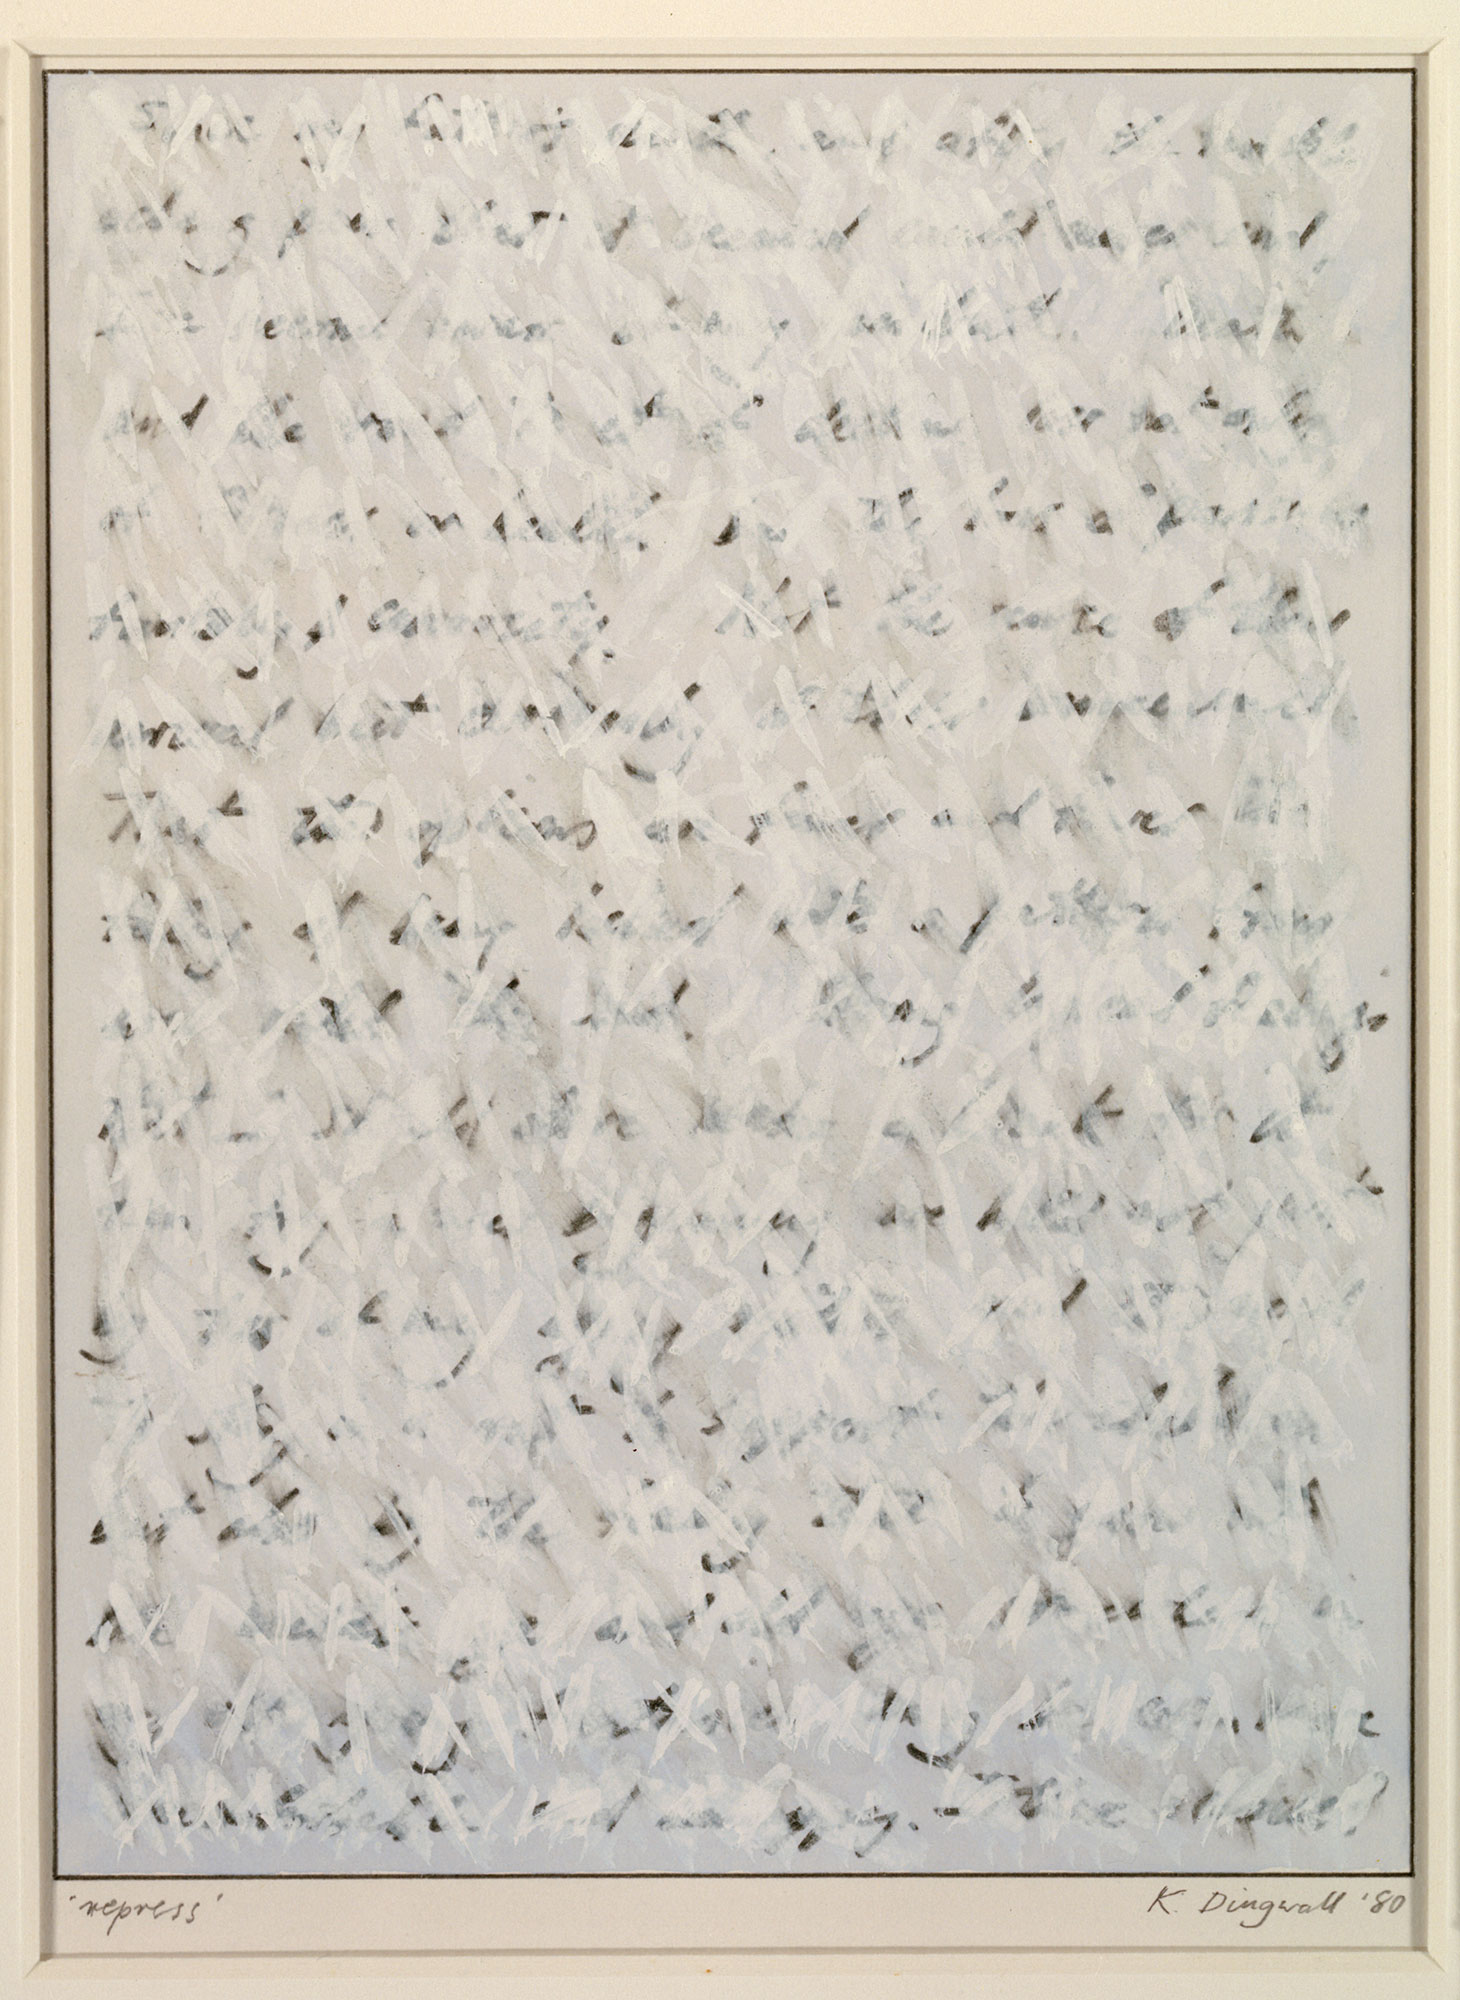 Kenneth Dingwall, Repress, 1980, pencil and gouache on card, 20.3cm x 15.2 cm